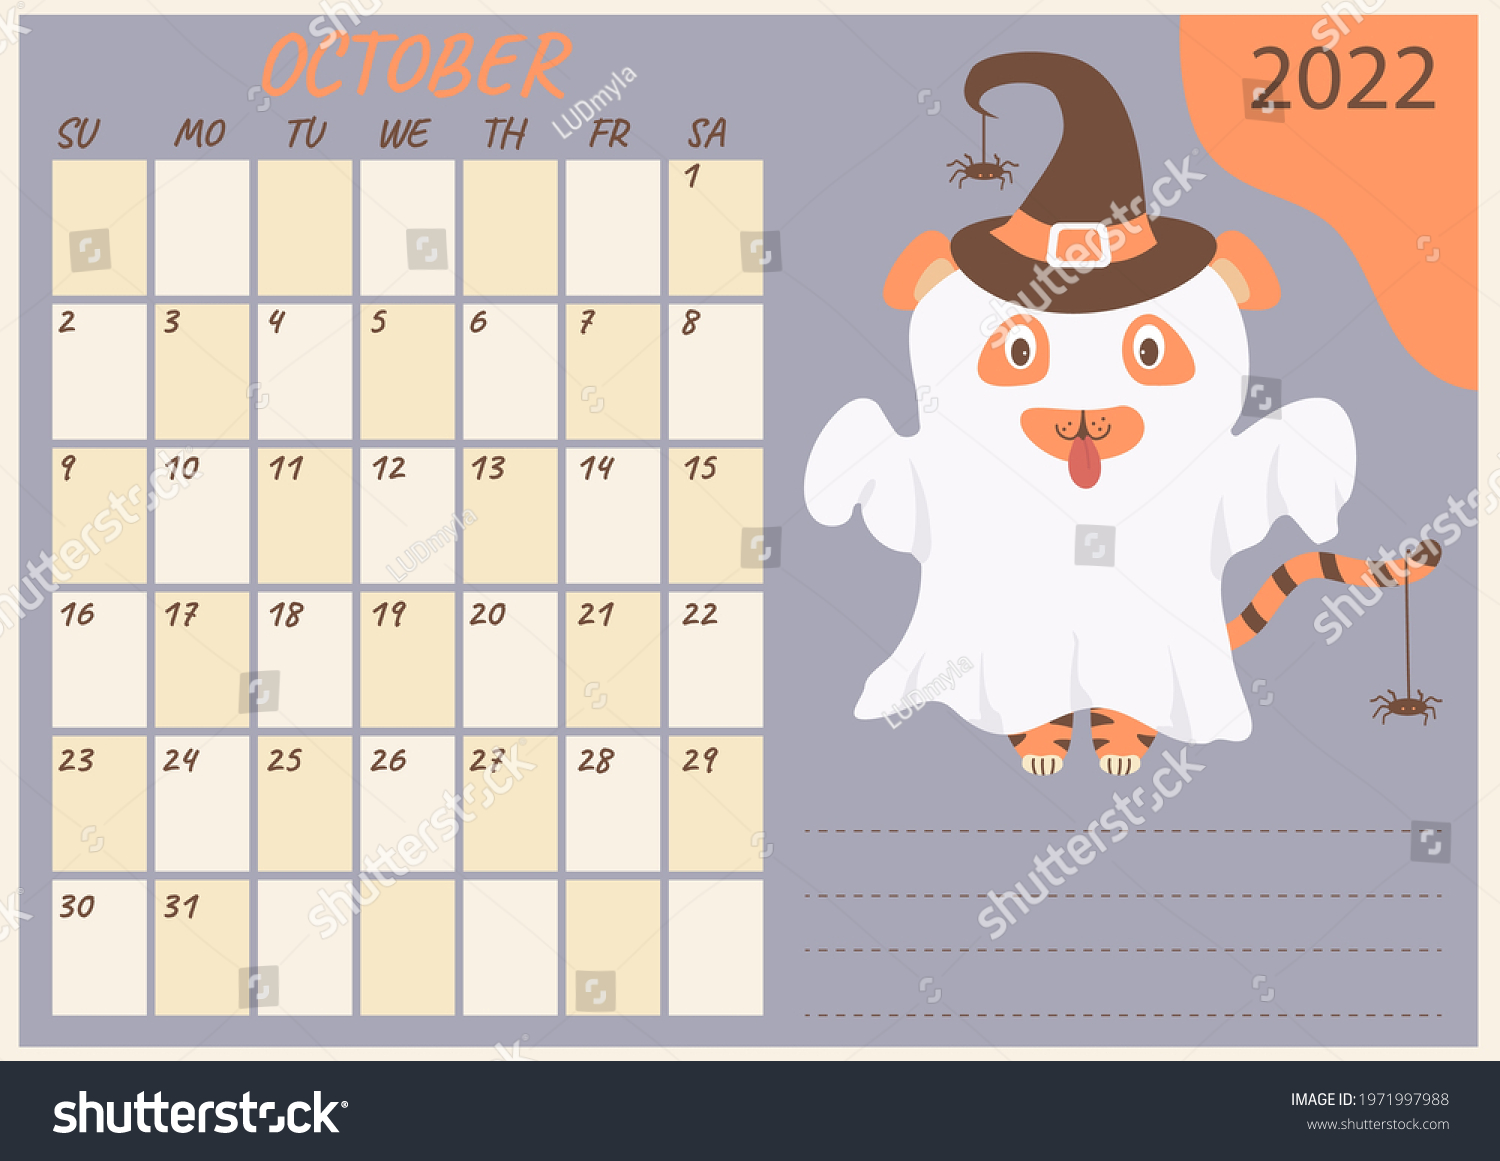 Cute October 2022 Calendar Planner Calendar October 2022 Cute Ghost Stock Vector (Royalty Free)  1971997988